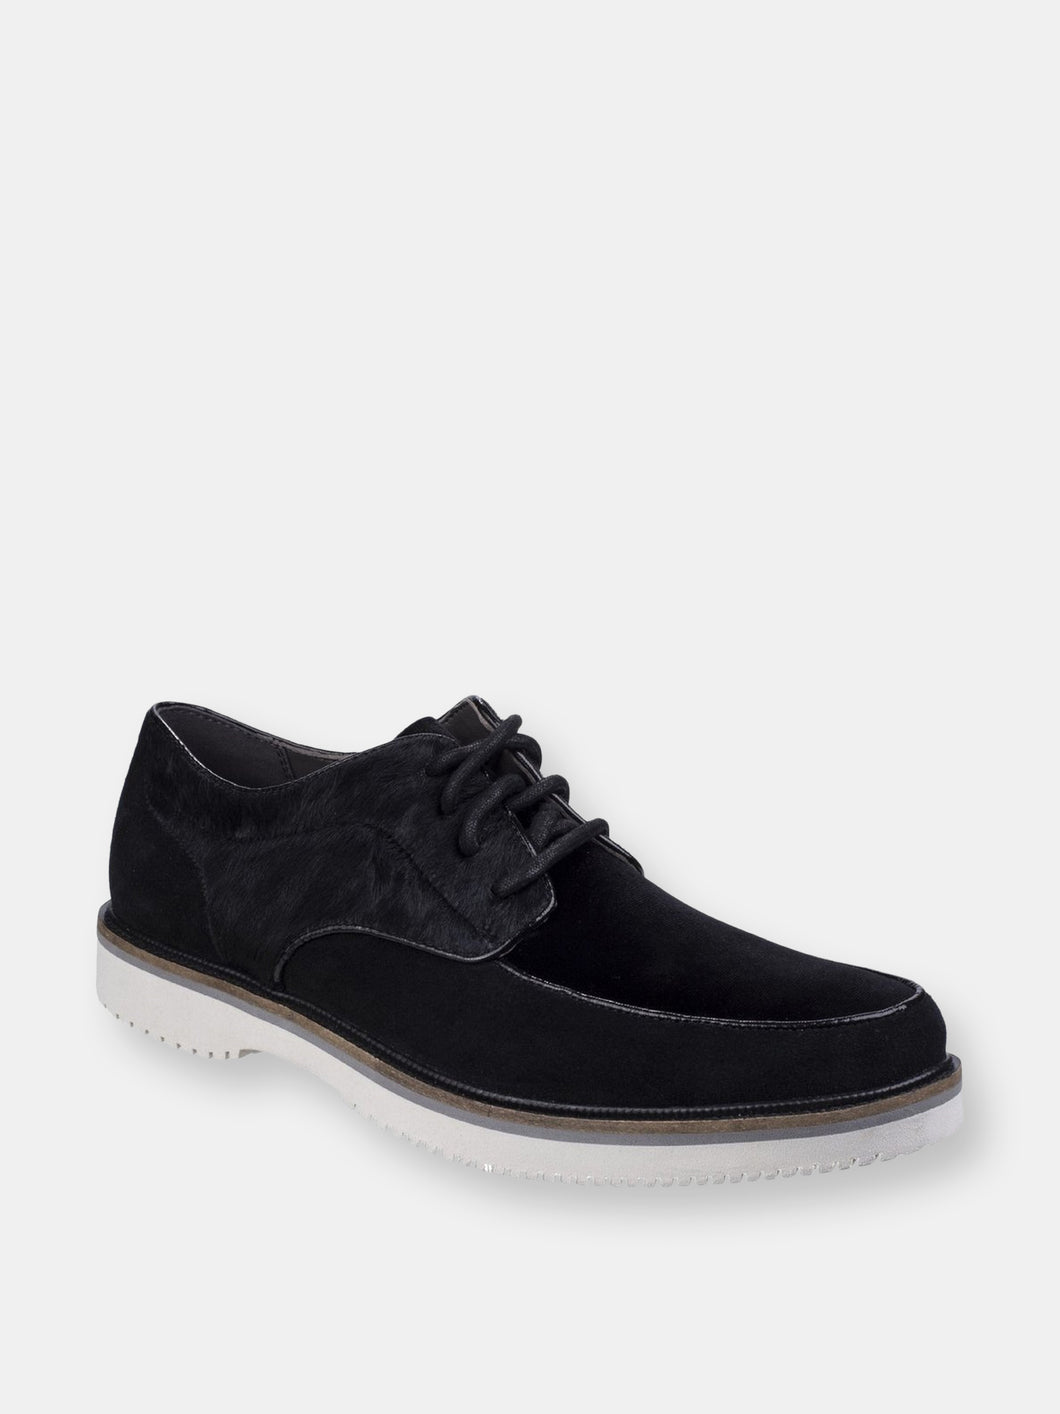 Mens Bernard 58 Suede Oxford Shoes - Black